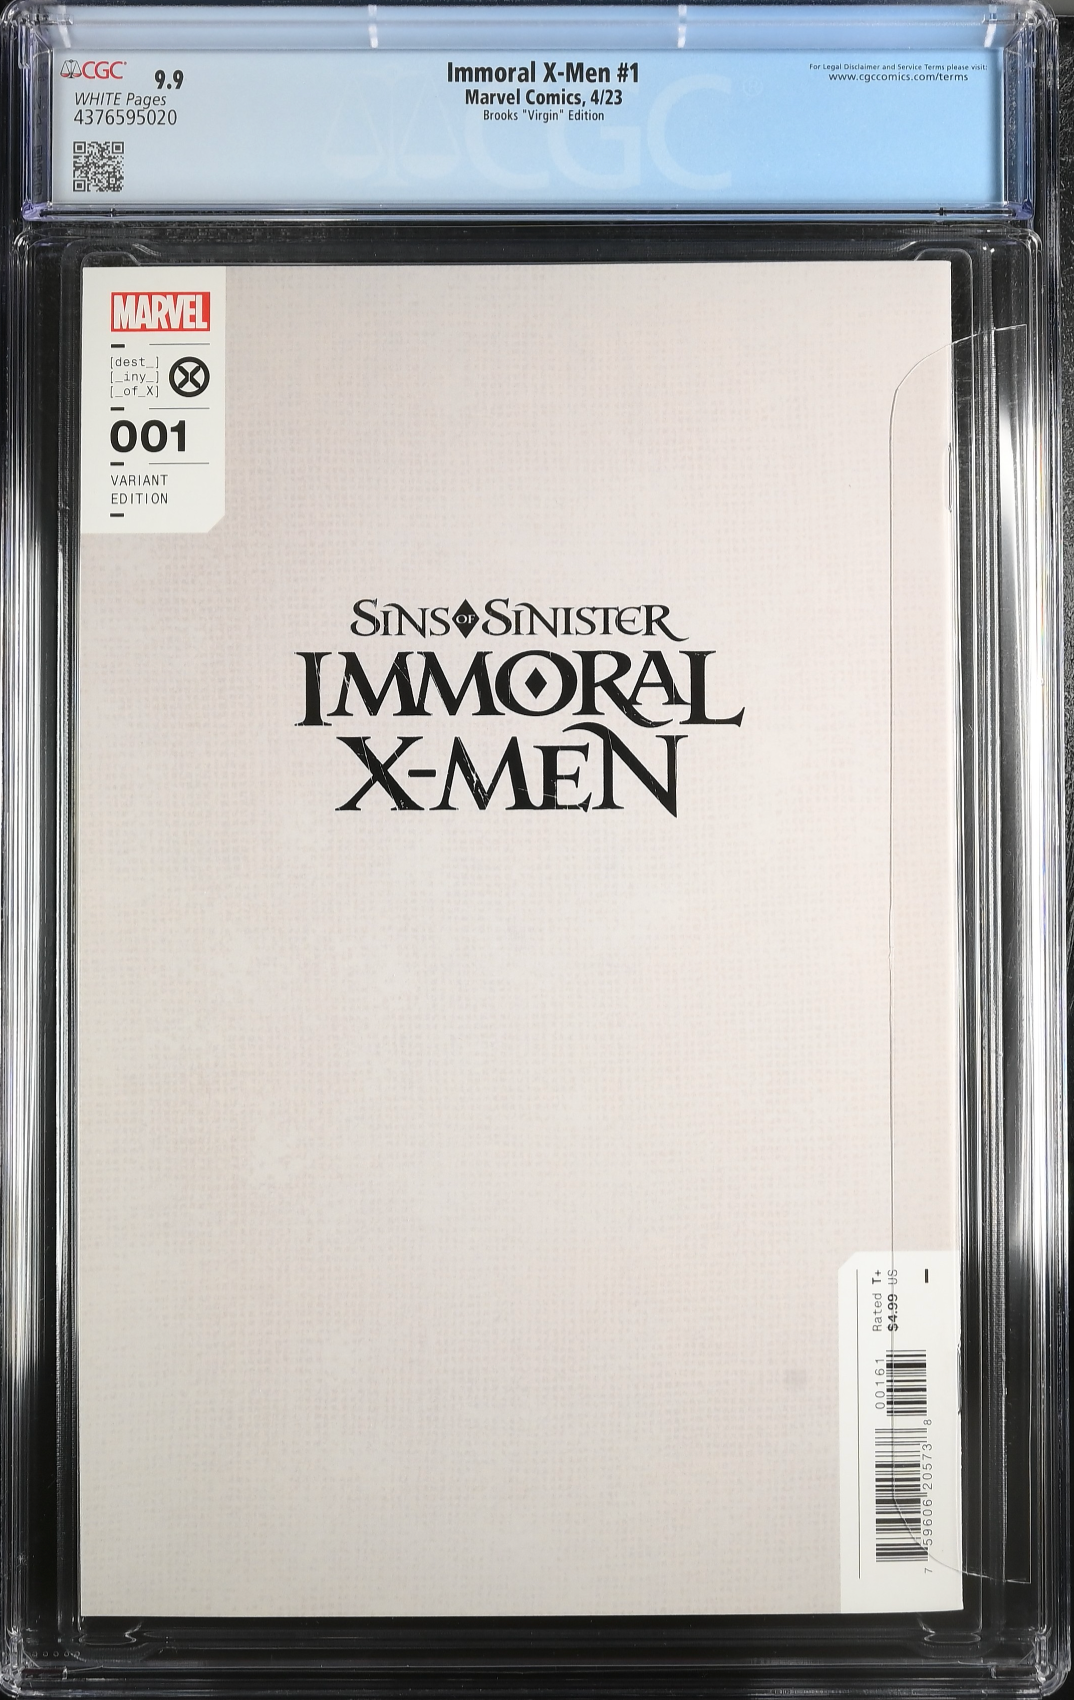 Immoral X-Men #1 Brooks 1:50 Virgin Retailer Incentive Variant CGC 9.9